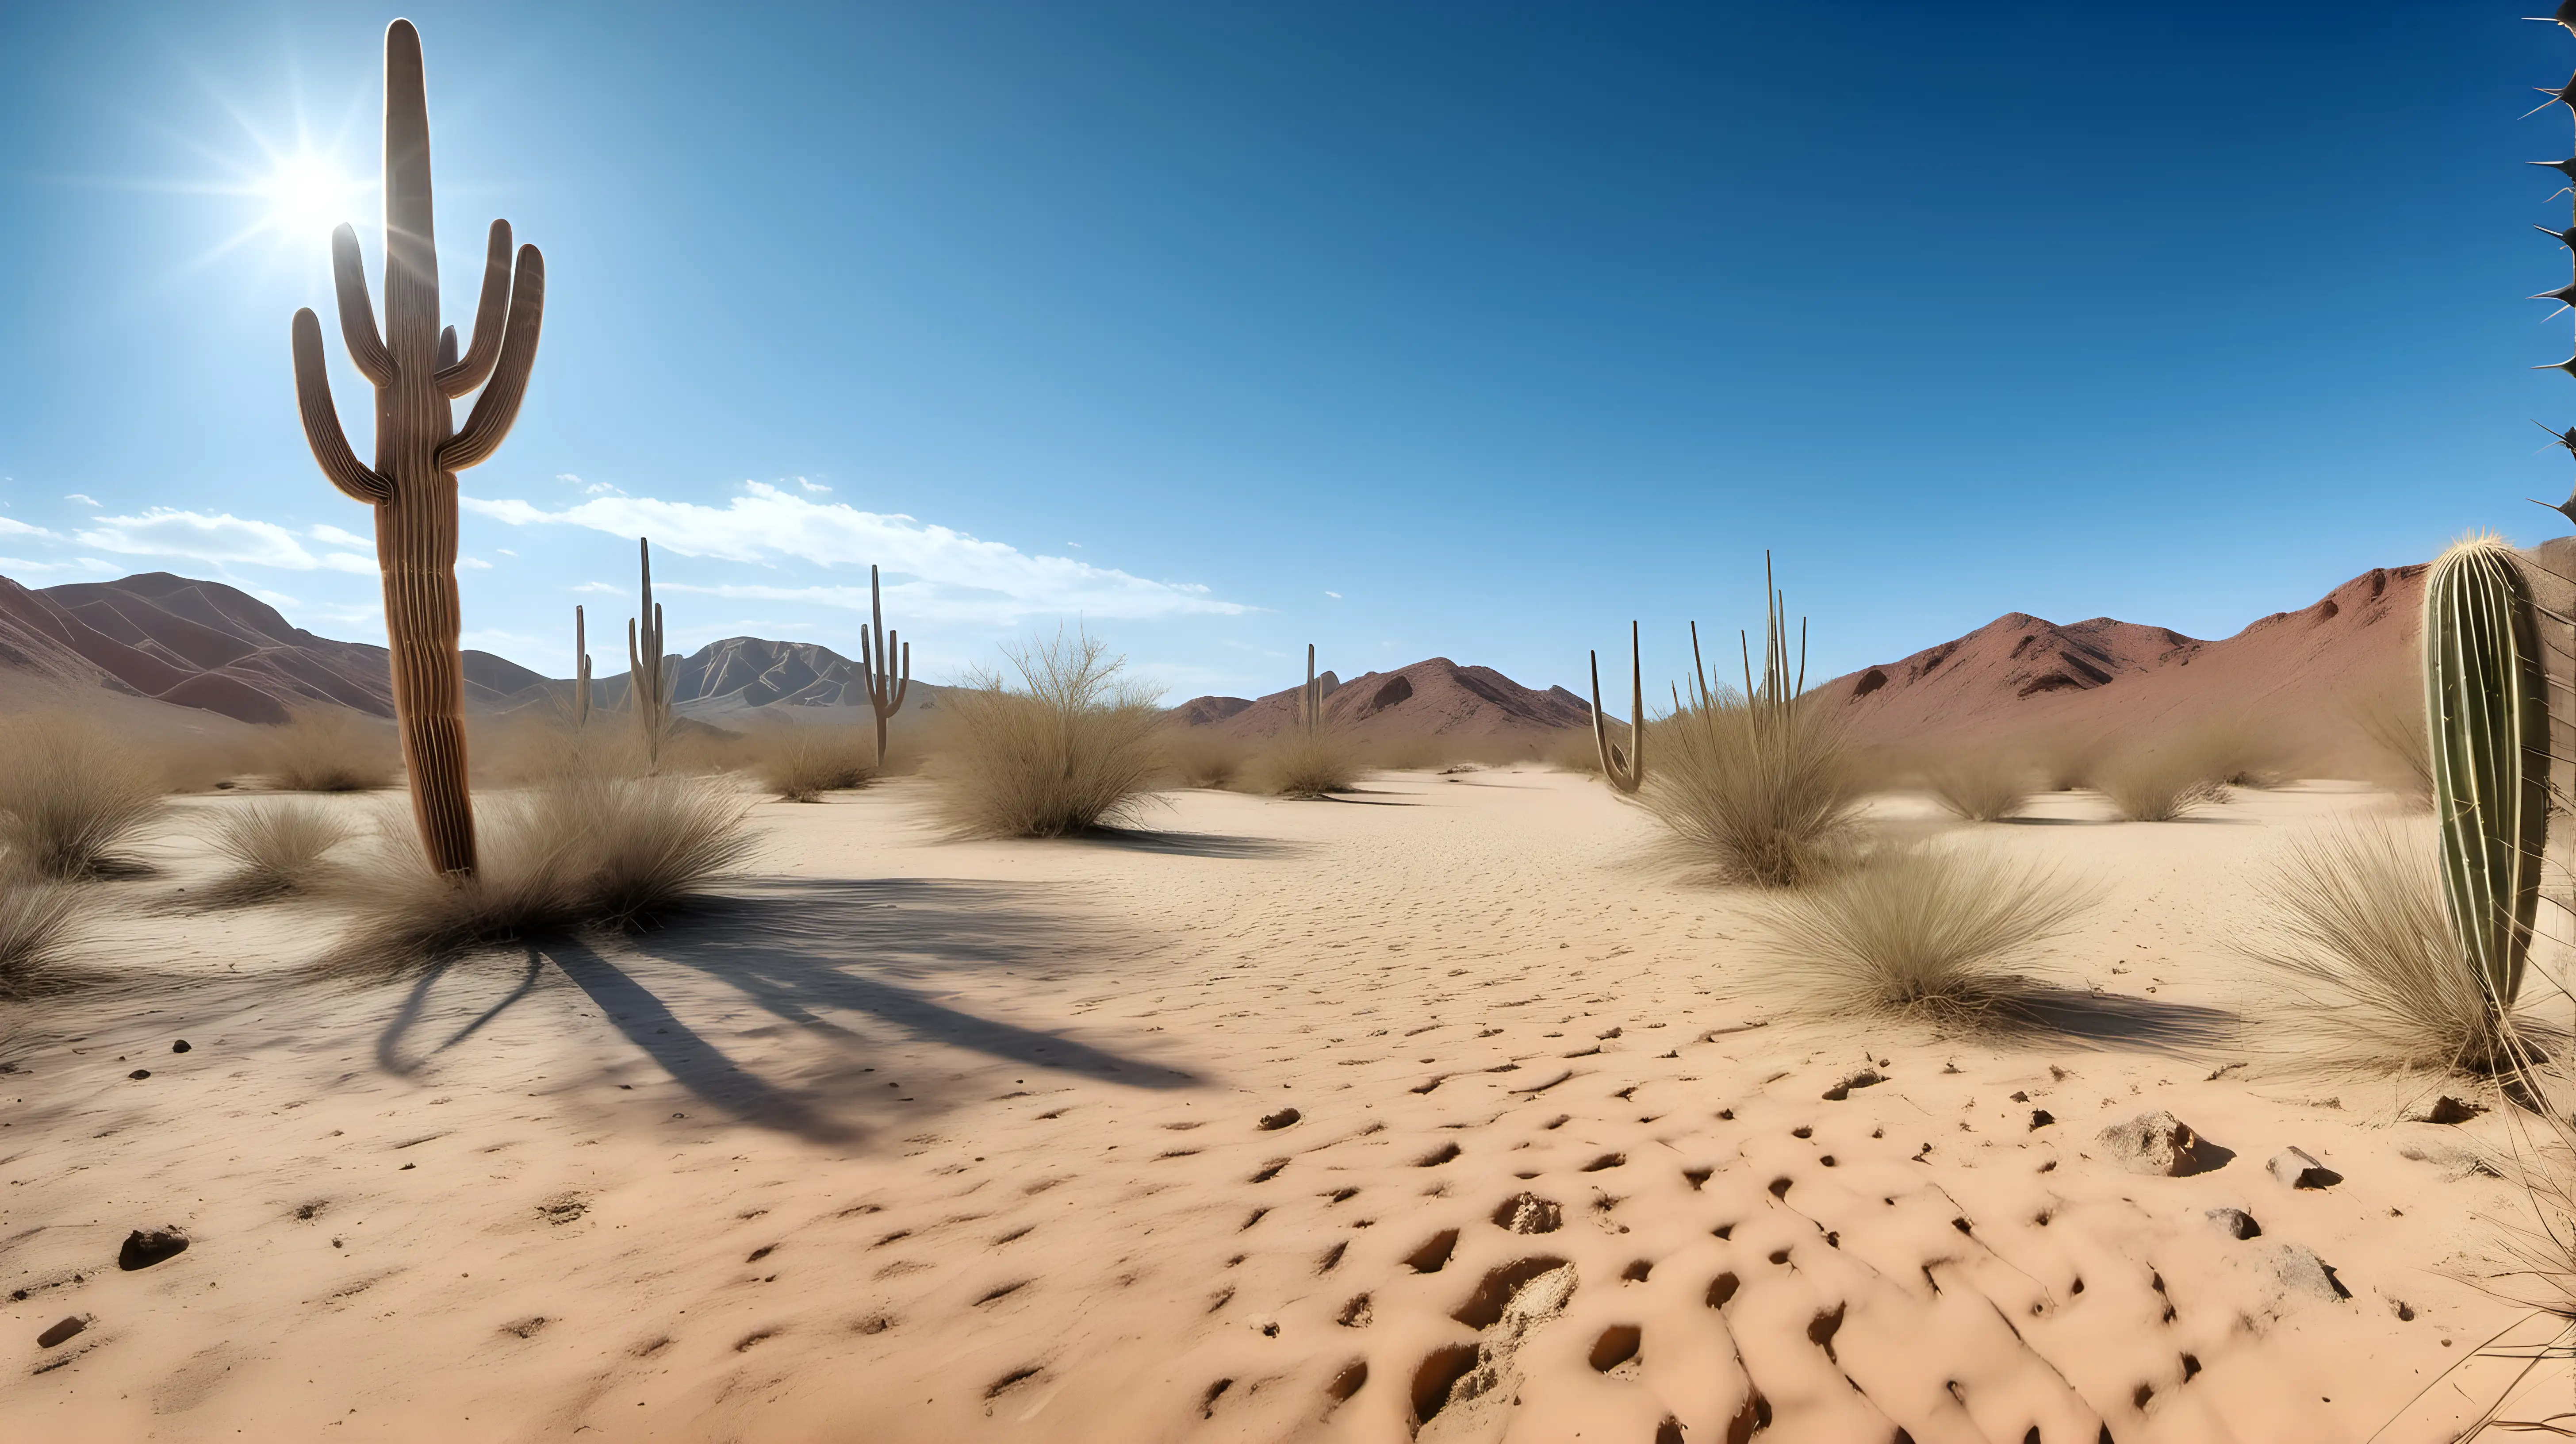 Sandy desert landscape with cactus, blue sky, photo shot